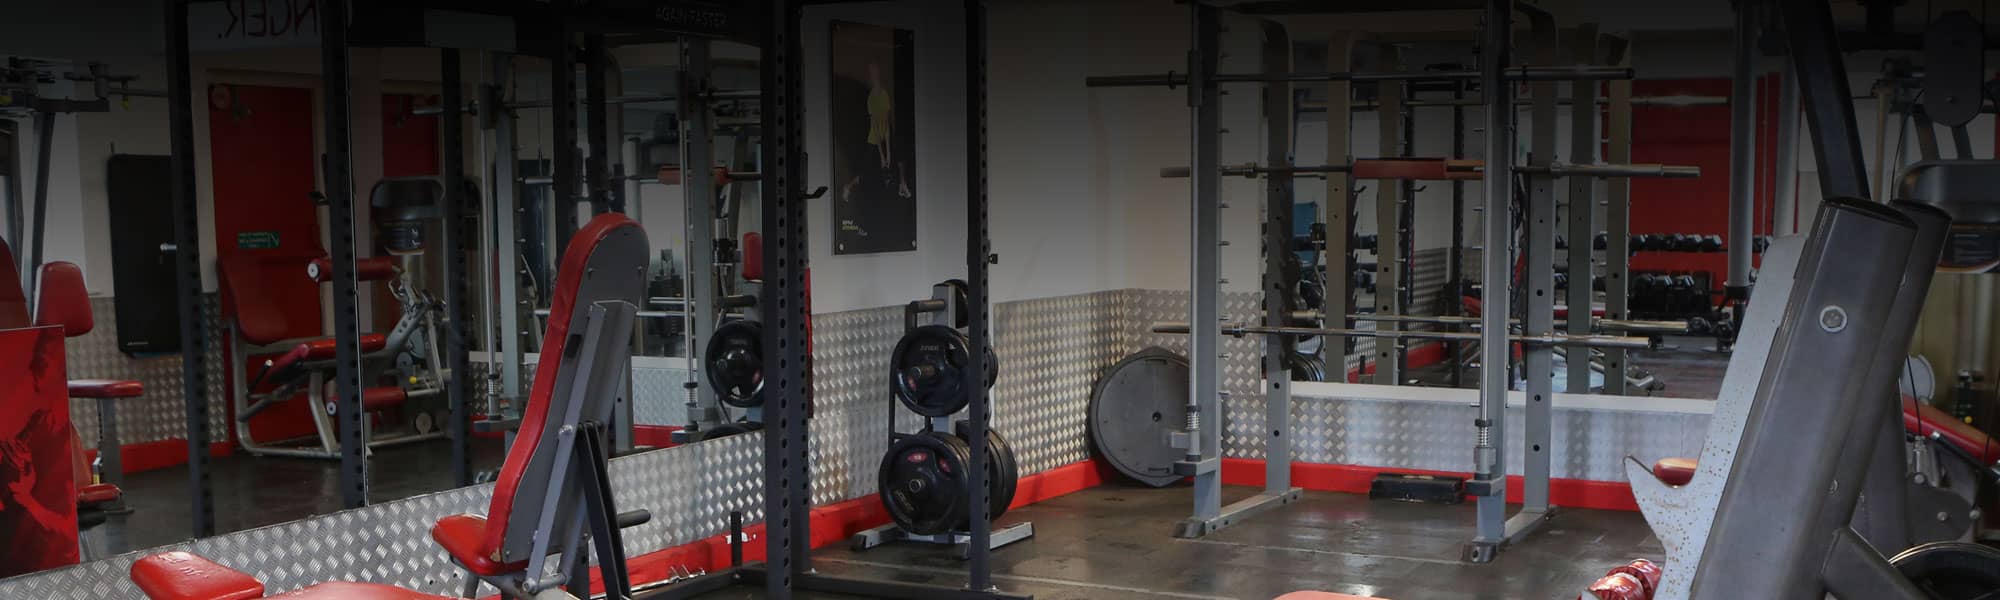 Weights area in Wrexham gym